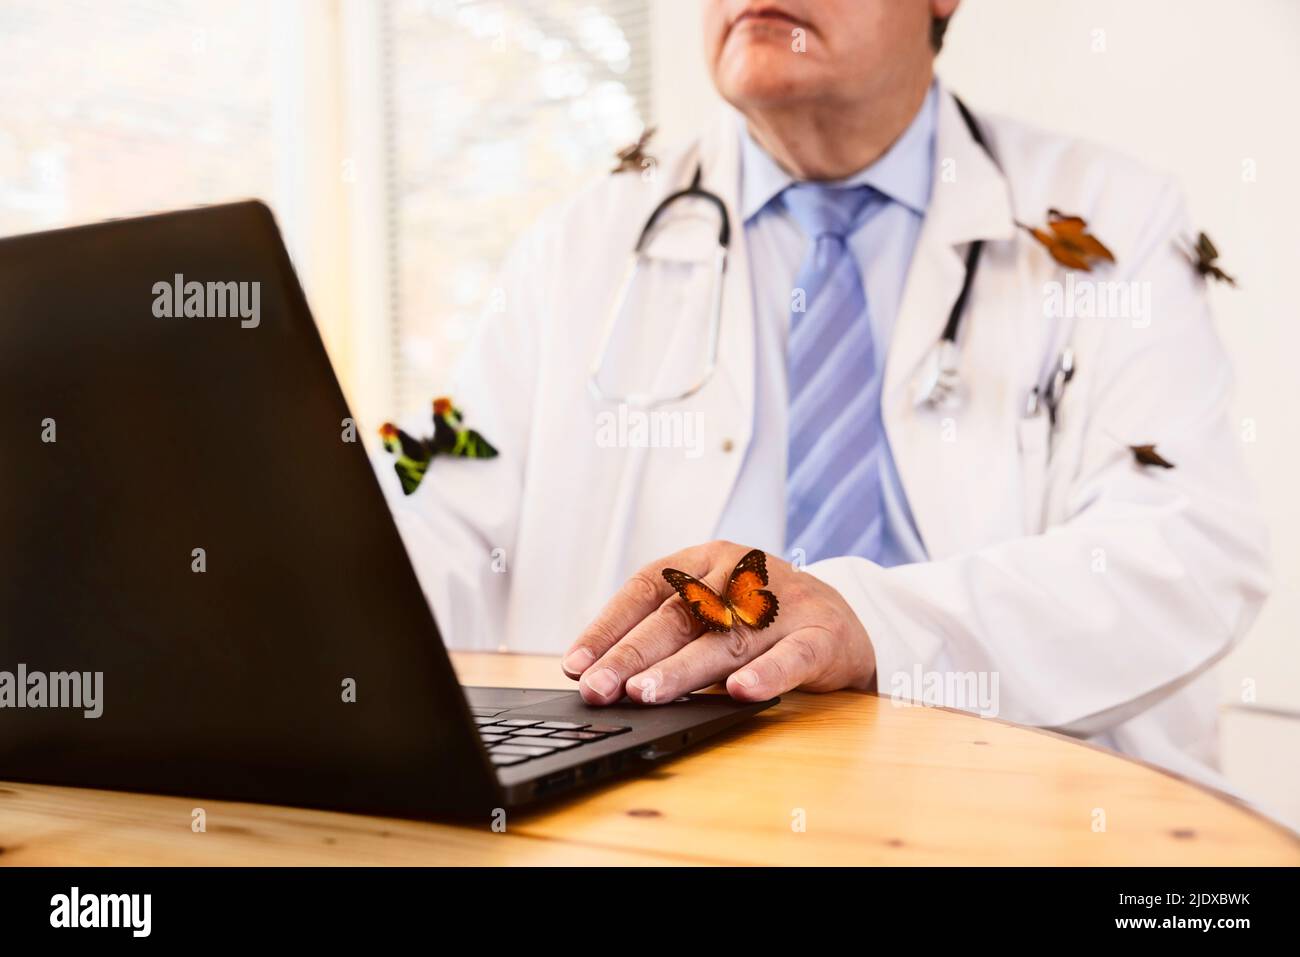 Butterflies on senior doctor using laptop at desk Stock Photo